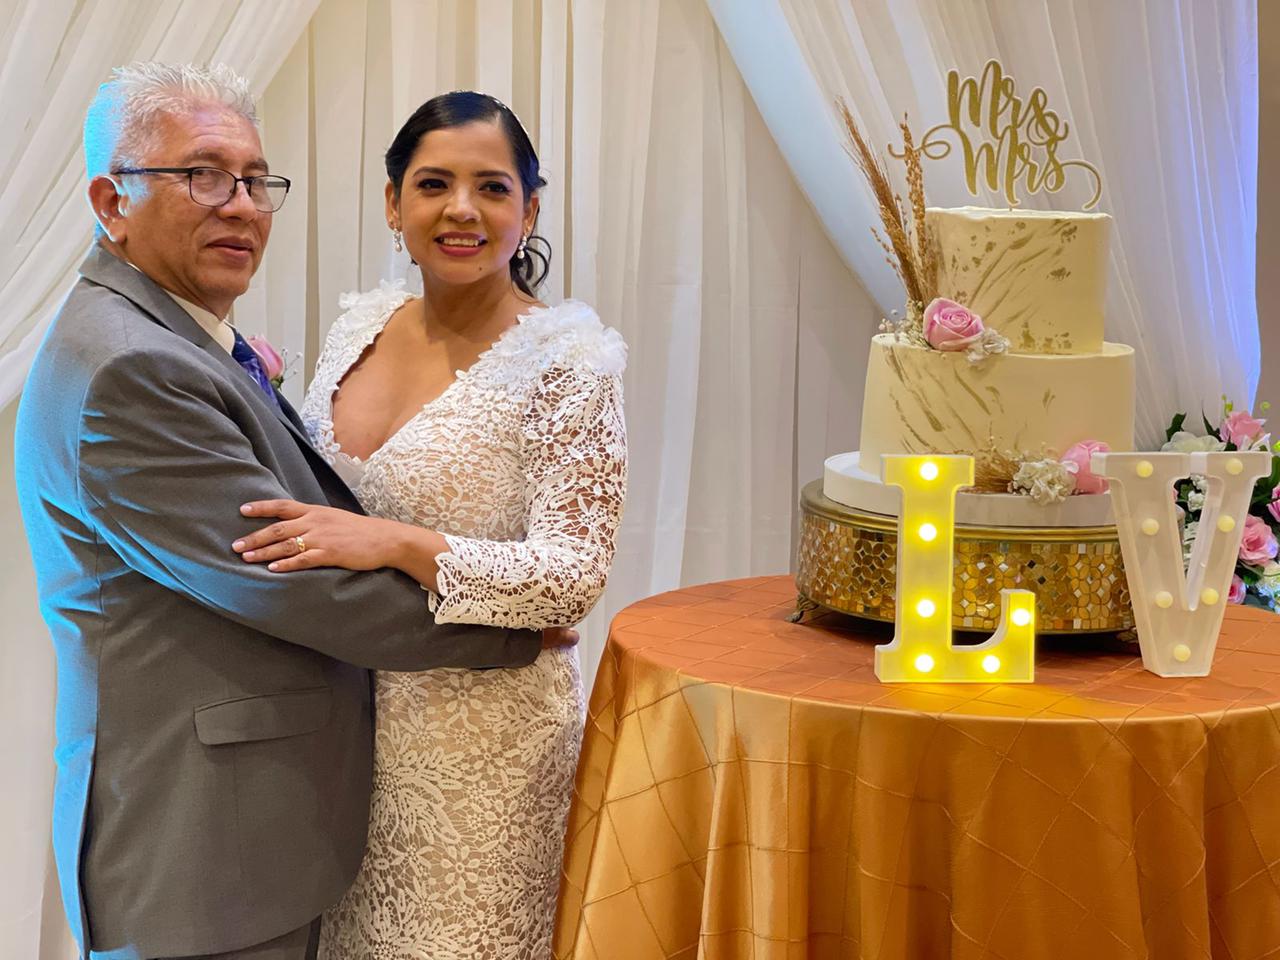 La boda de Luis Erazo y Vilma Funes… ¡Intima e inolvidable!